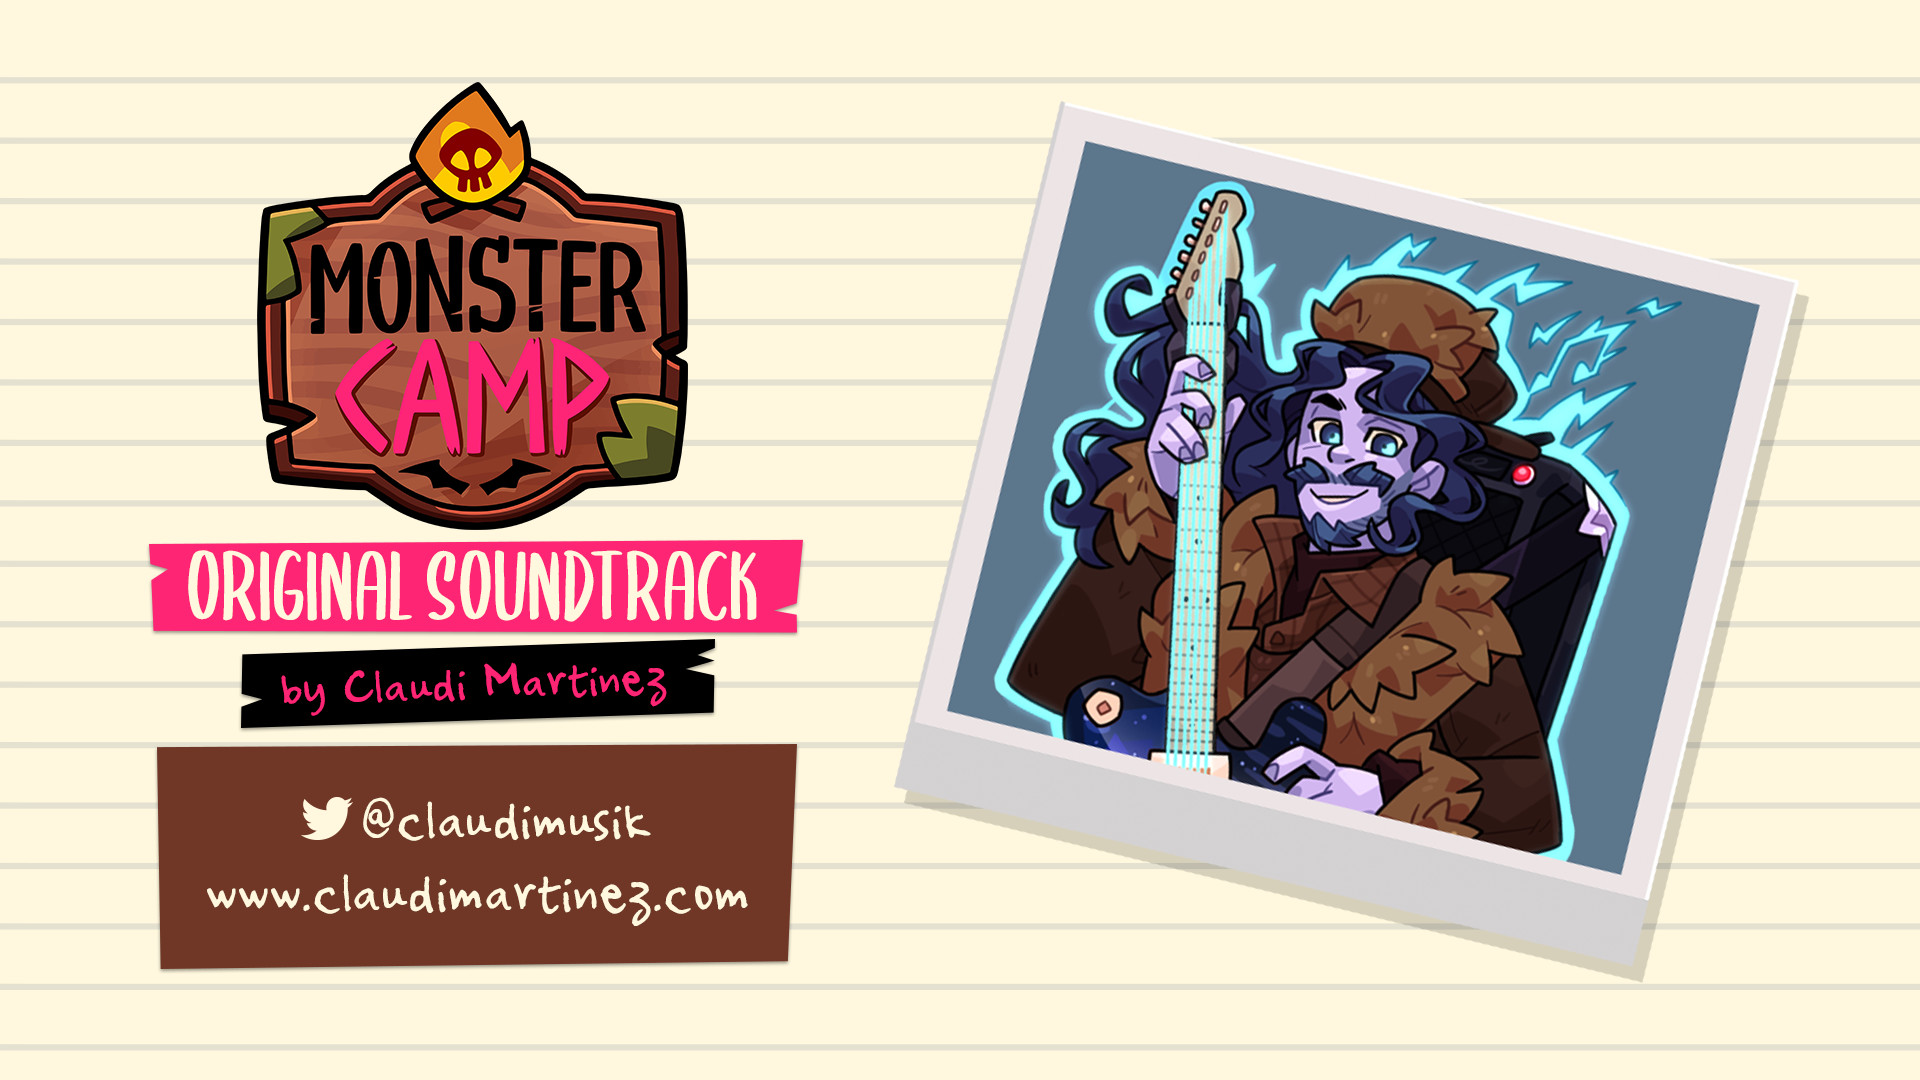 Monster Prom 2: Monster Camp Soundtrack on Steam